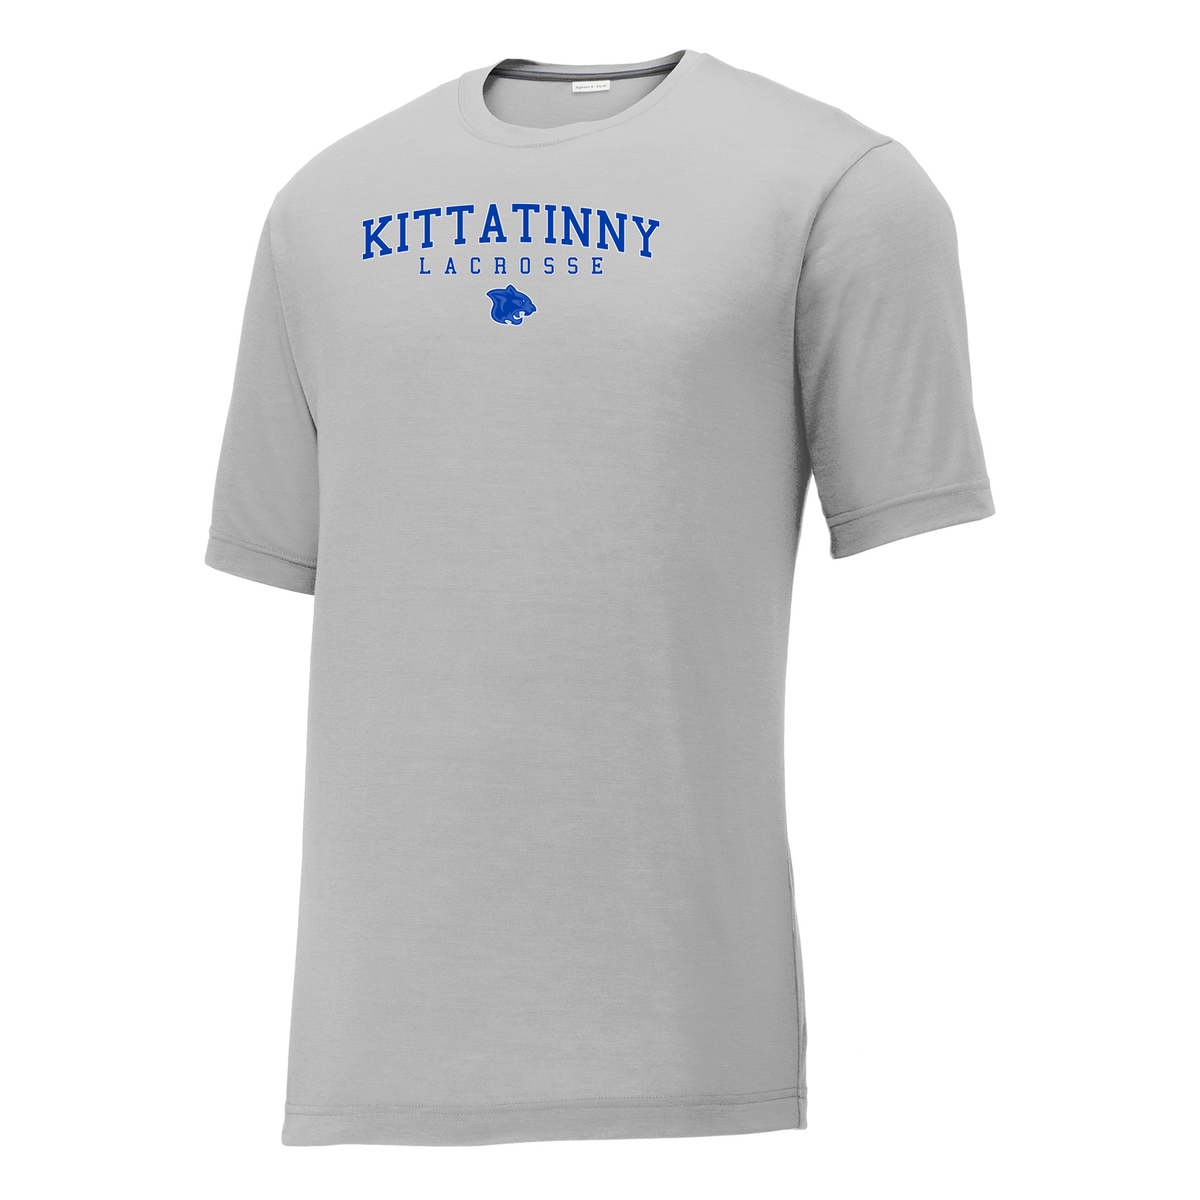 Kittatinny Lacrosse CottonTouch Performance T-Shirt